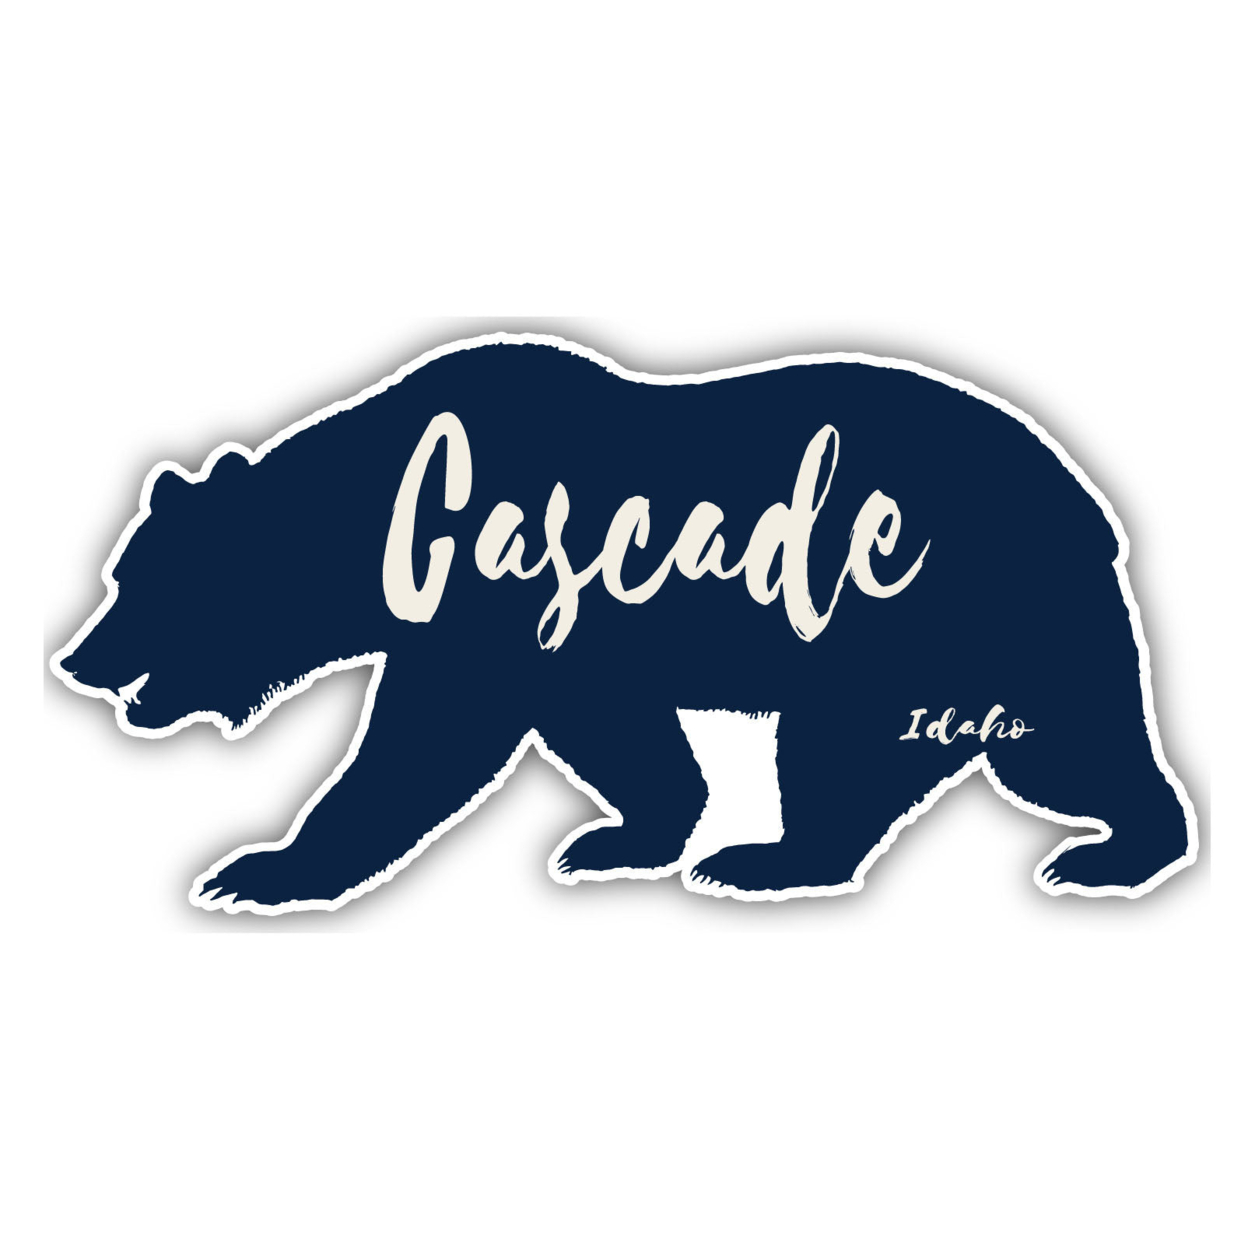 Cascade Idaho Souvenir Decorative Stickers (Choose Theme And Size) - 4-Pack, 12-Inch, Bear